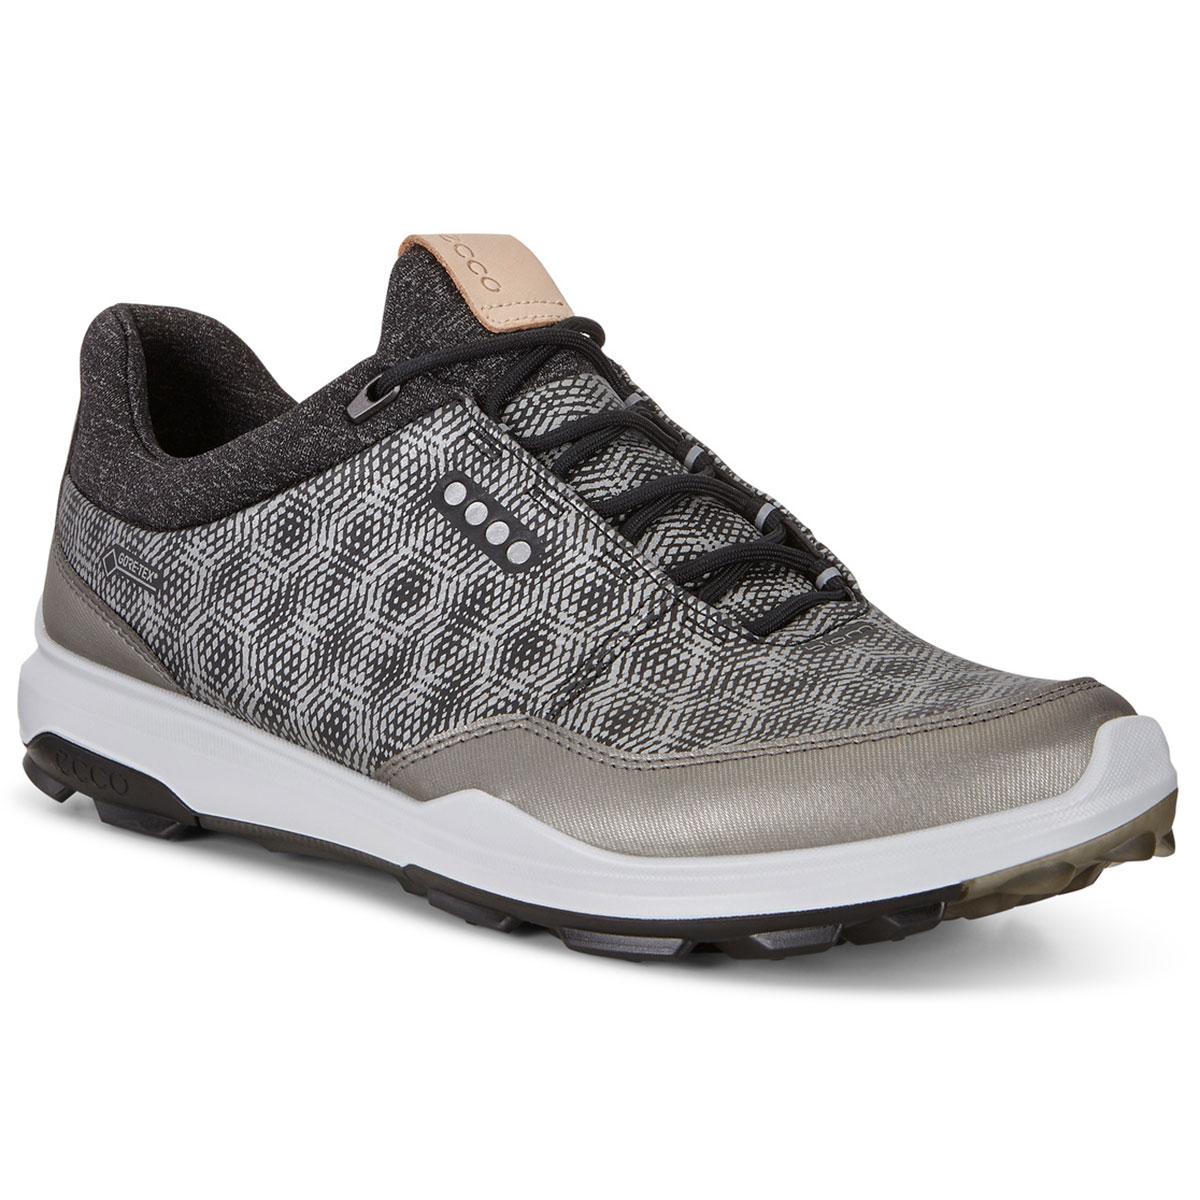 ECCO Biom Hybrid 3 Shoes from american golf